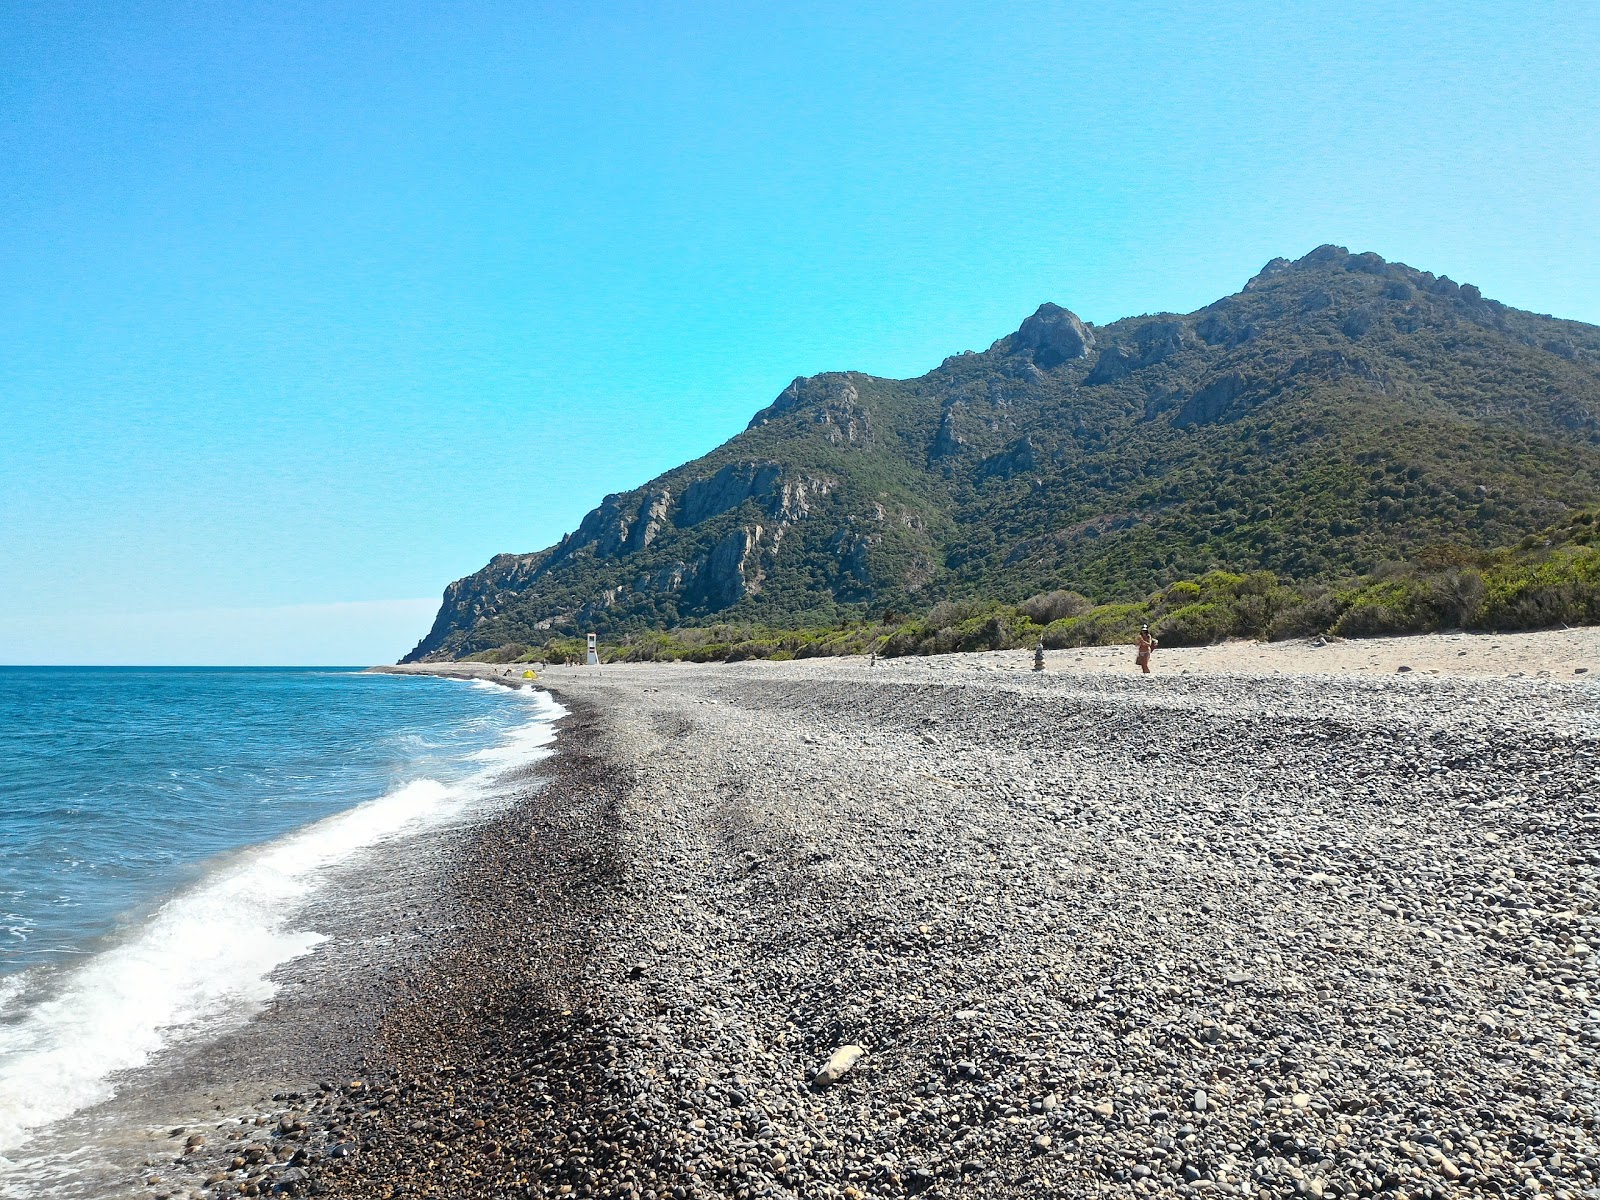 Spiaggia di Coccorocci'in fotoğrafı mavi saf su yüzey ile